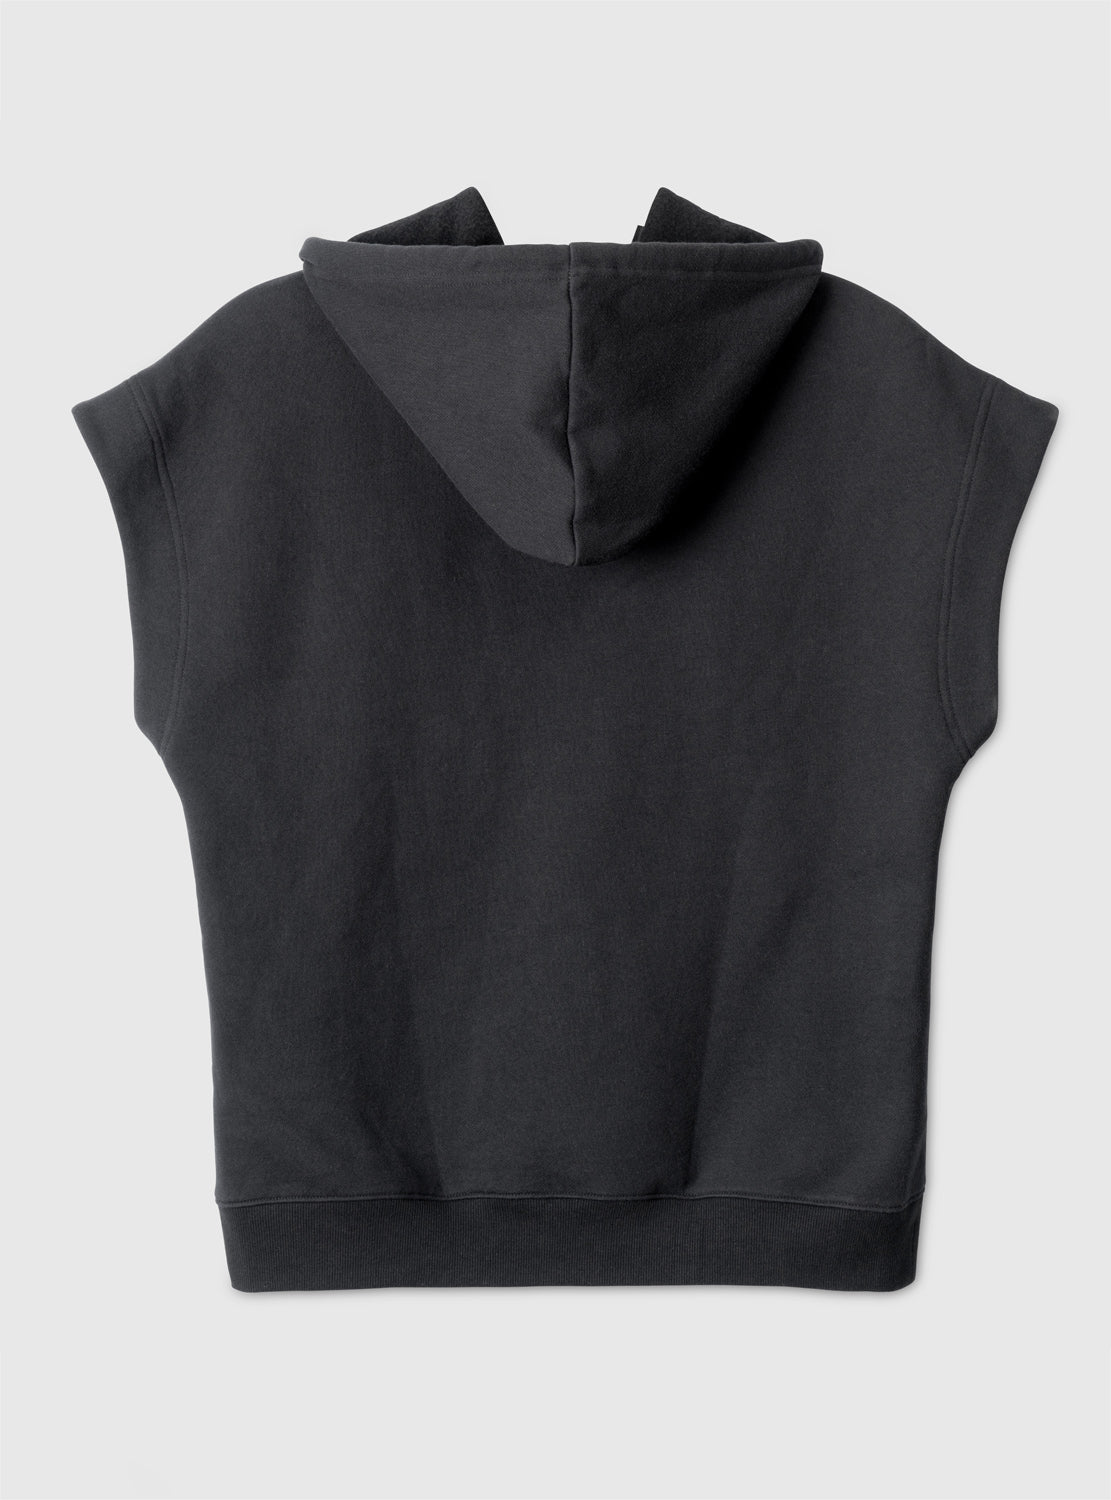 betty designs BDlab sportswear for women hoodie